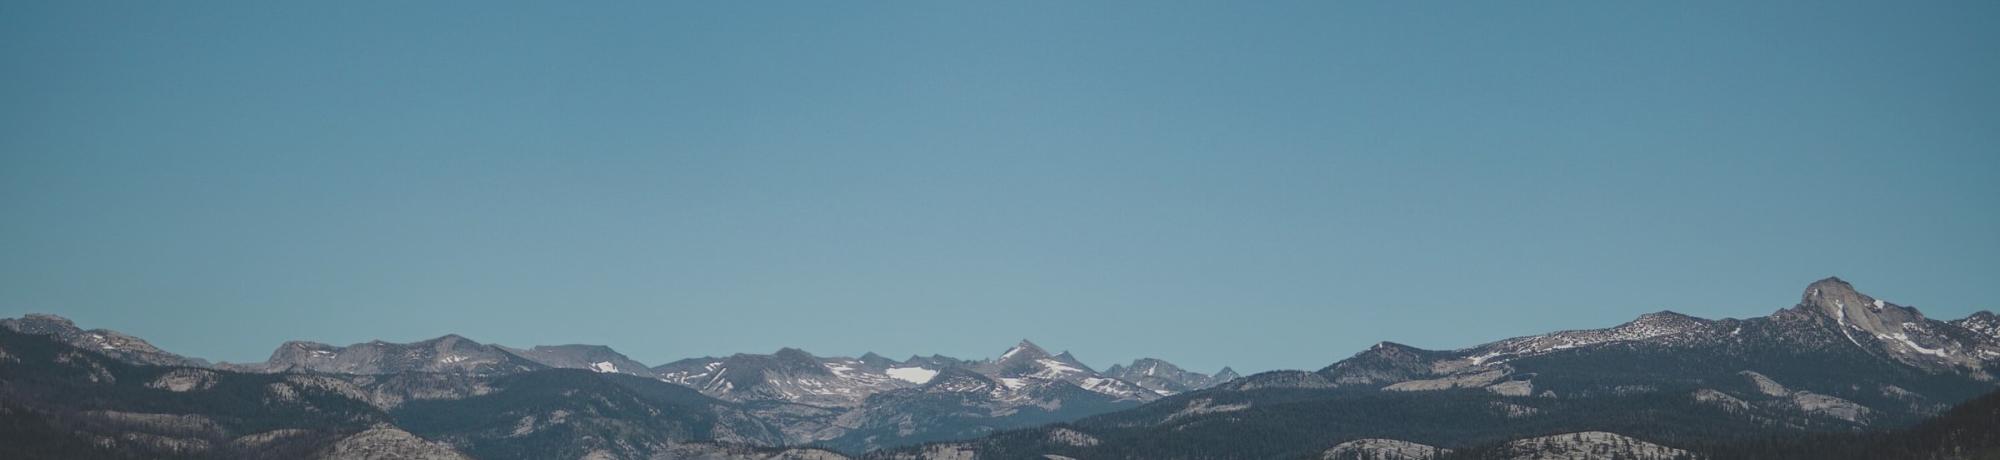 High Sierra Landscape 